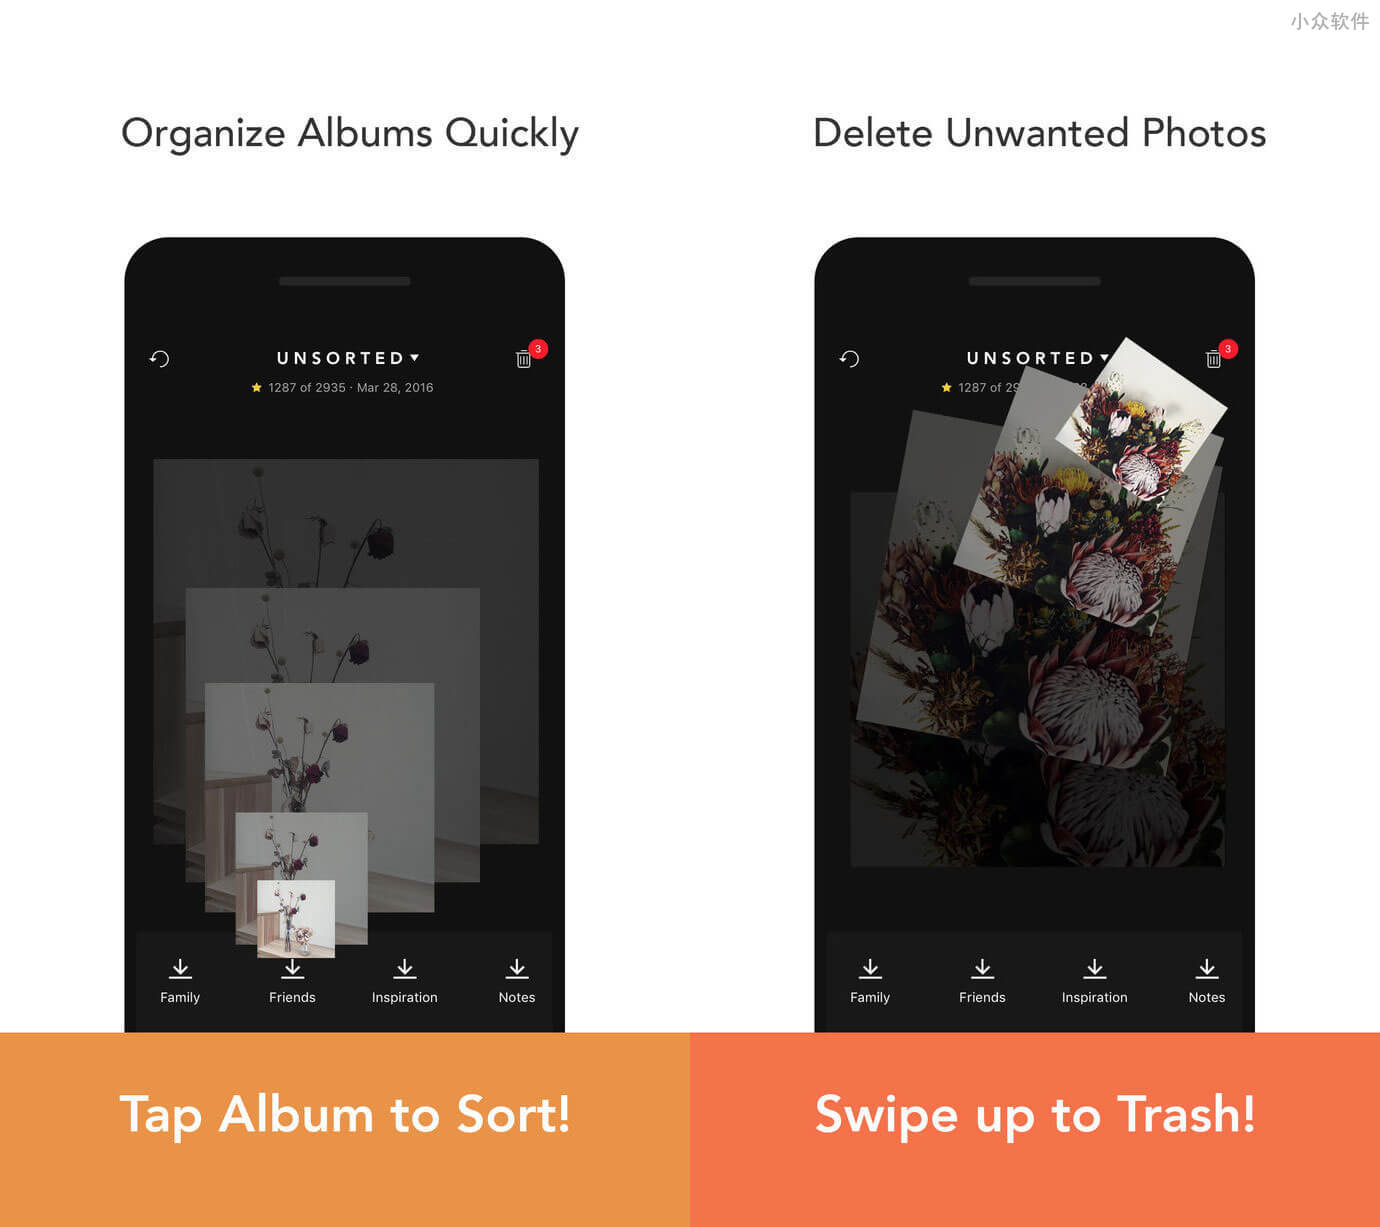 Slidebox - 通过拖拽整理照片：重新分类与删除低质量照片 [iOS/Android] 1